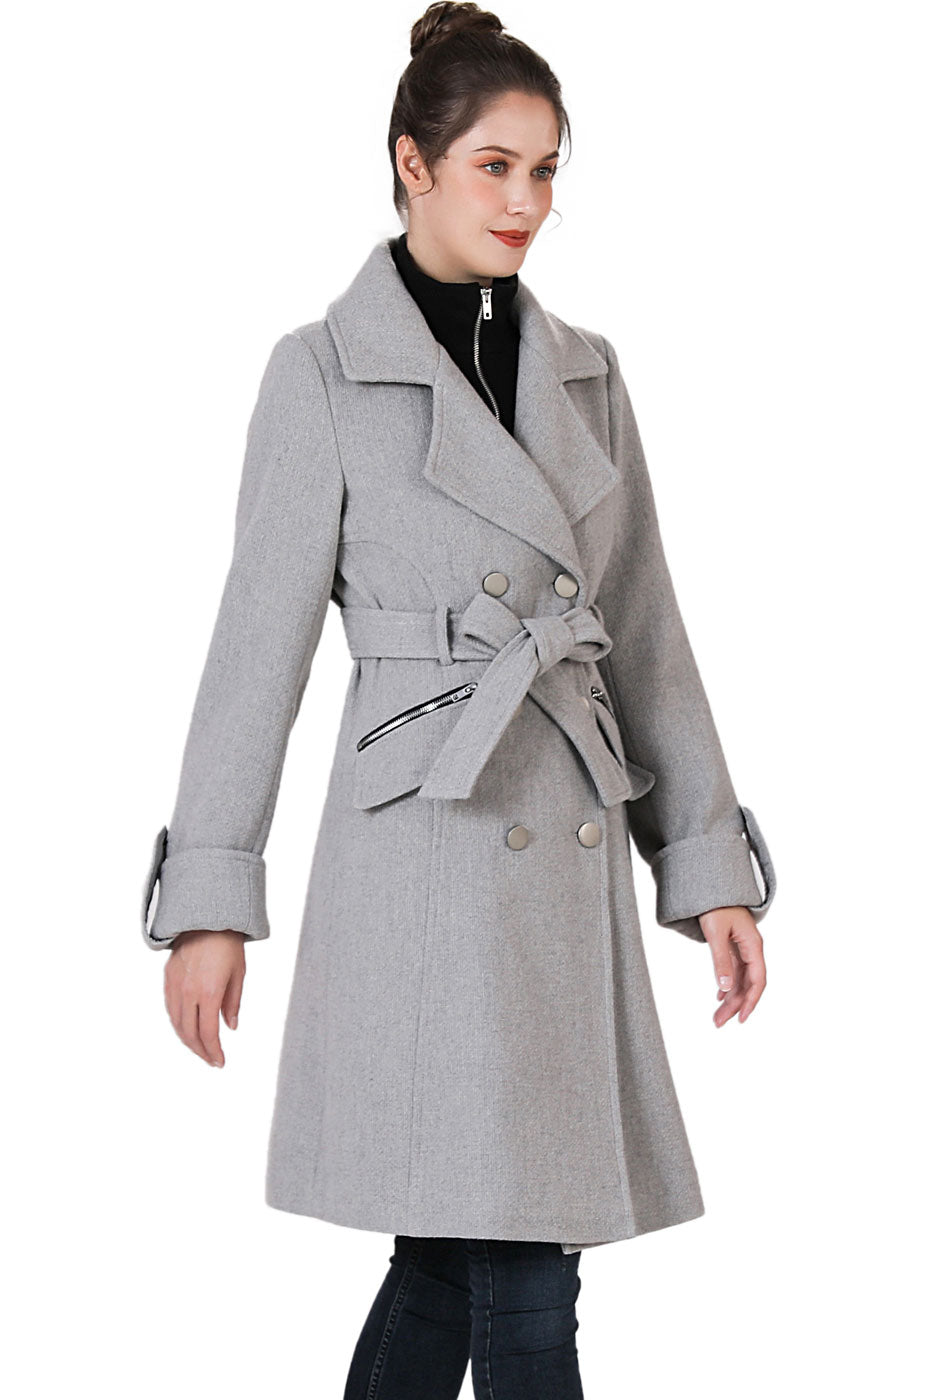 BGSD Women Nia Wool Belted Walker Coat with Removable Bib